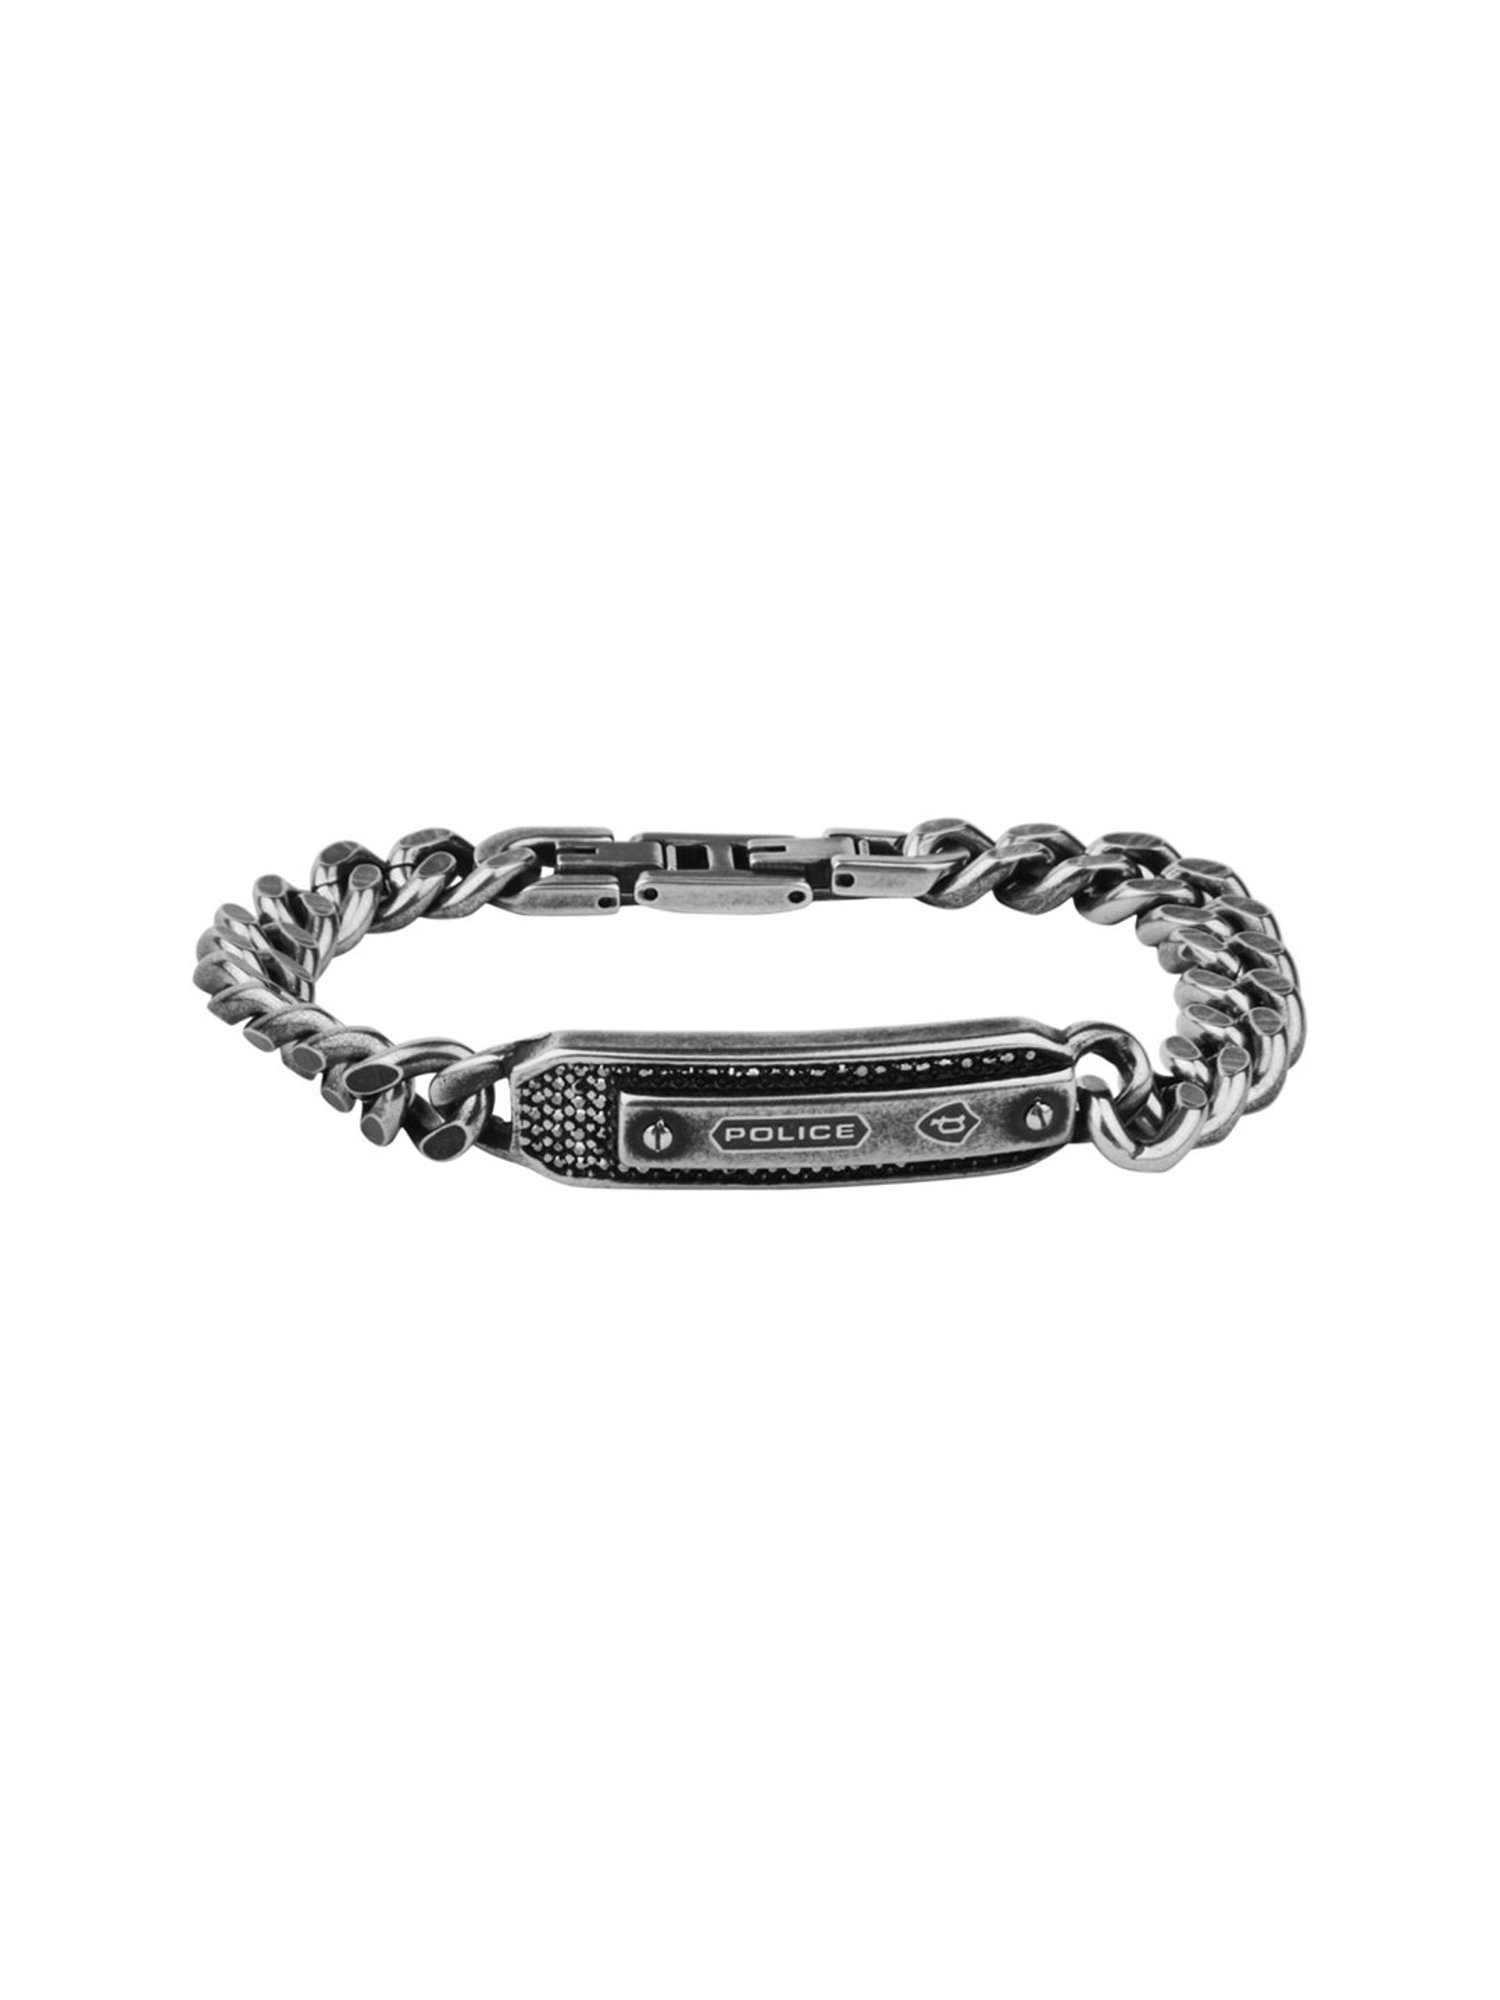 Buy Police Unisex Silver Bracelet online